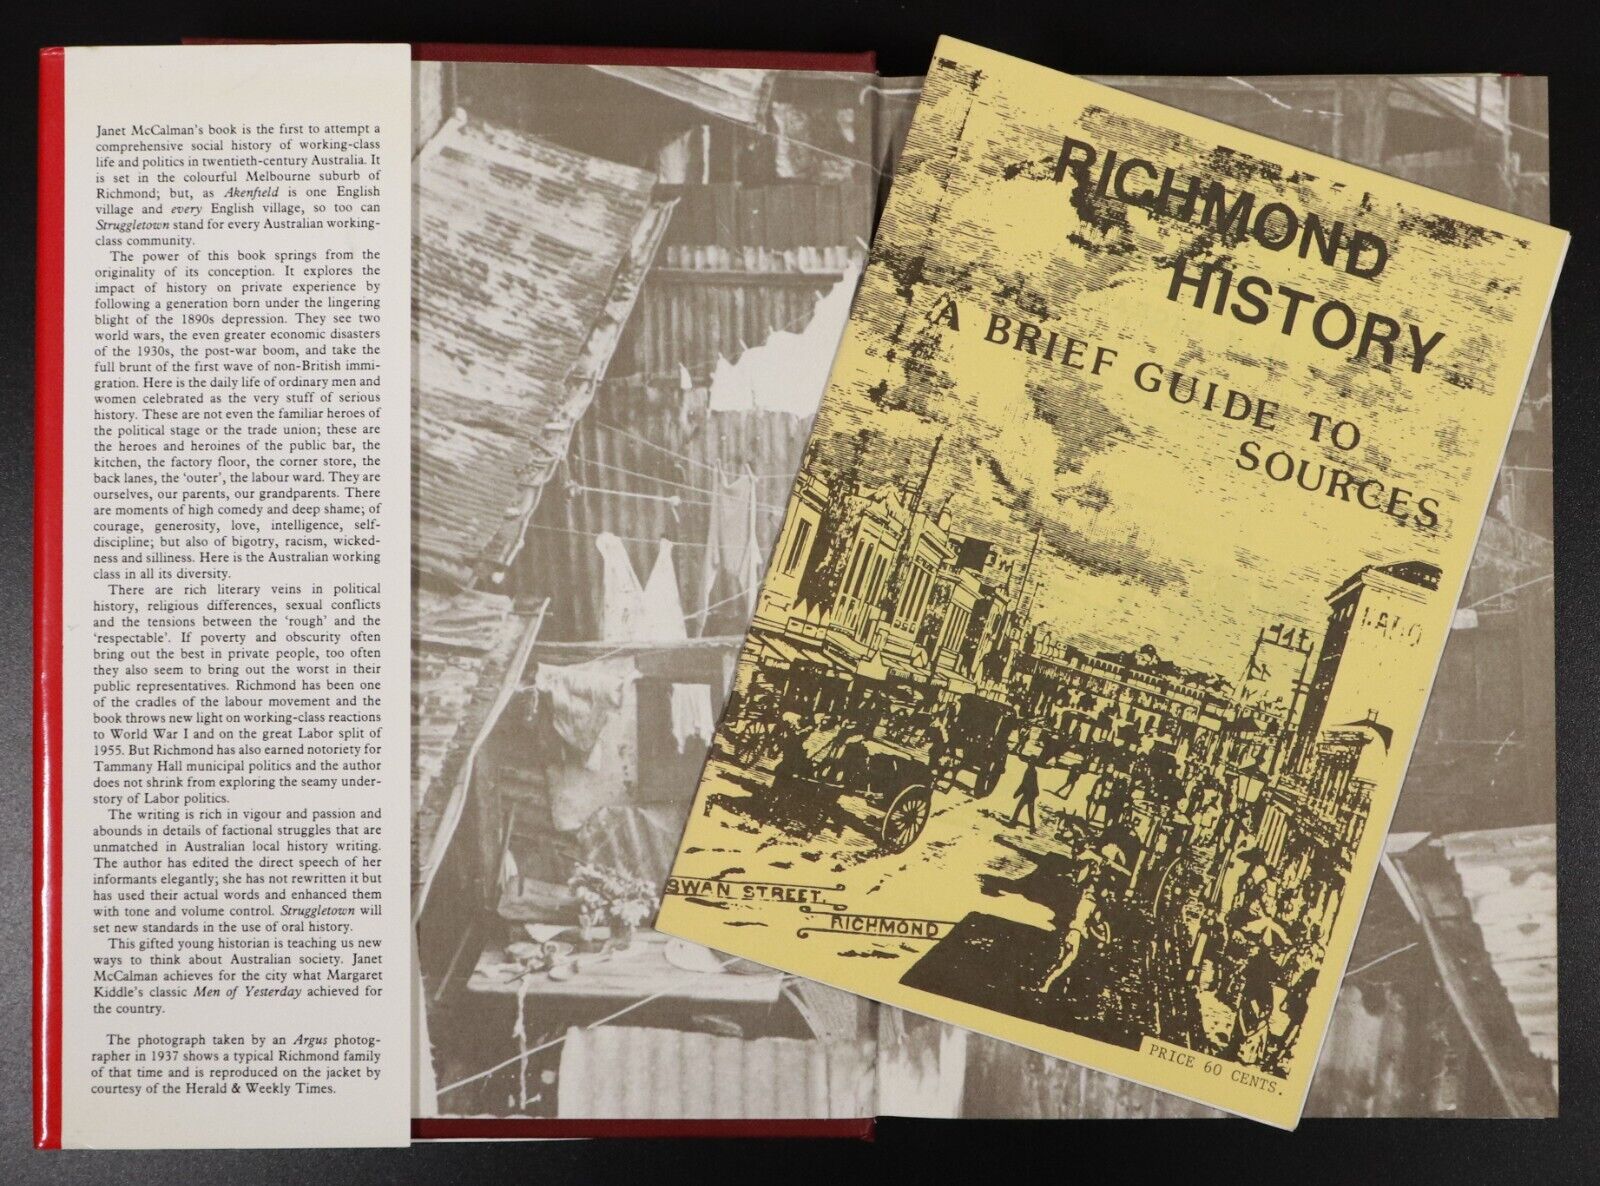 1984 Struggletown: Life In Richmond 1900-1965 - Australian Local History Book